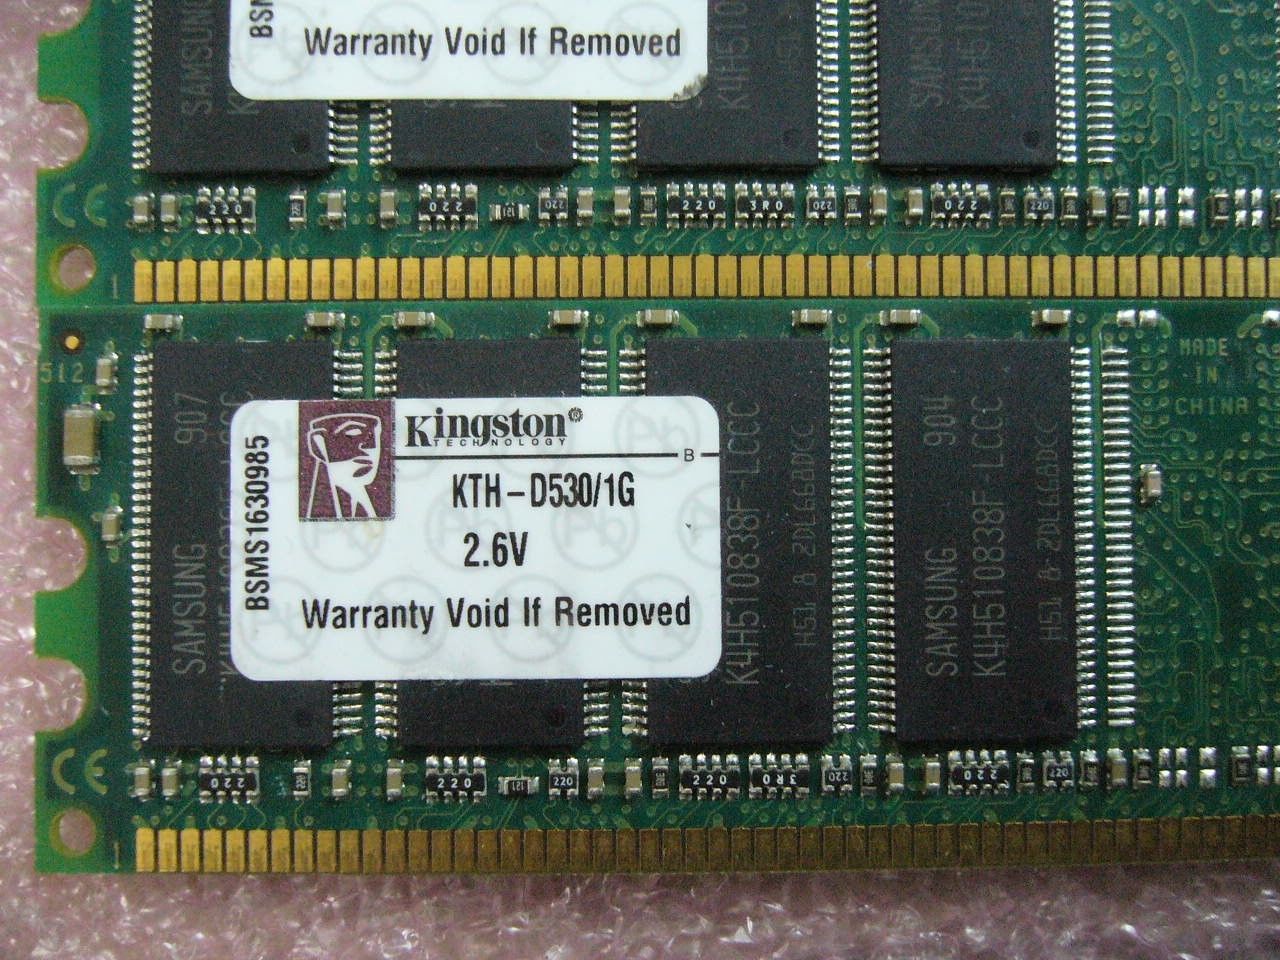 QTY 1x 1GB DDR 400Mhz PC3200 desktop non-ECC memory stick Kingston KTH-D530/1G - Click Image to Close